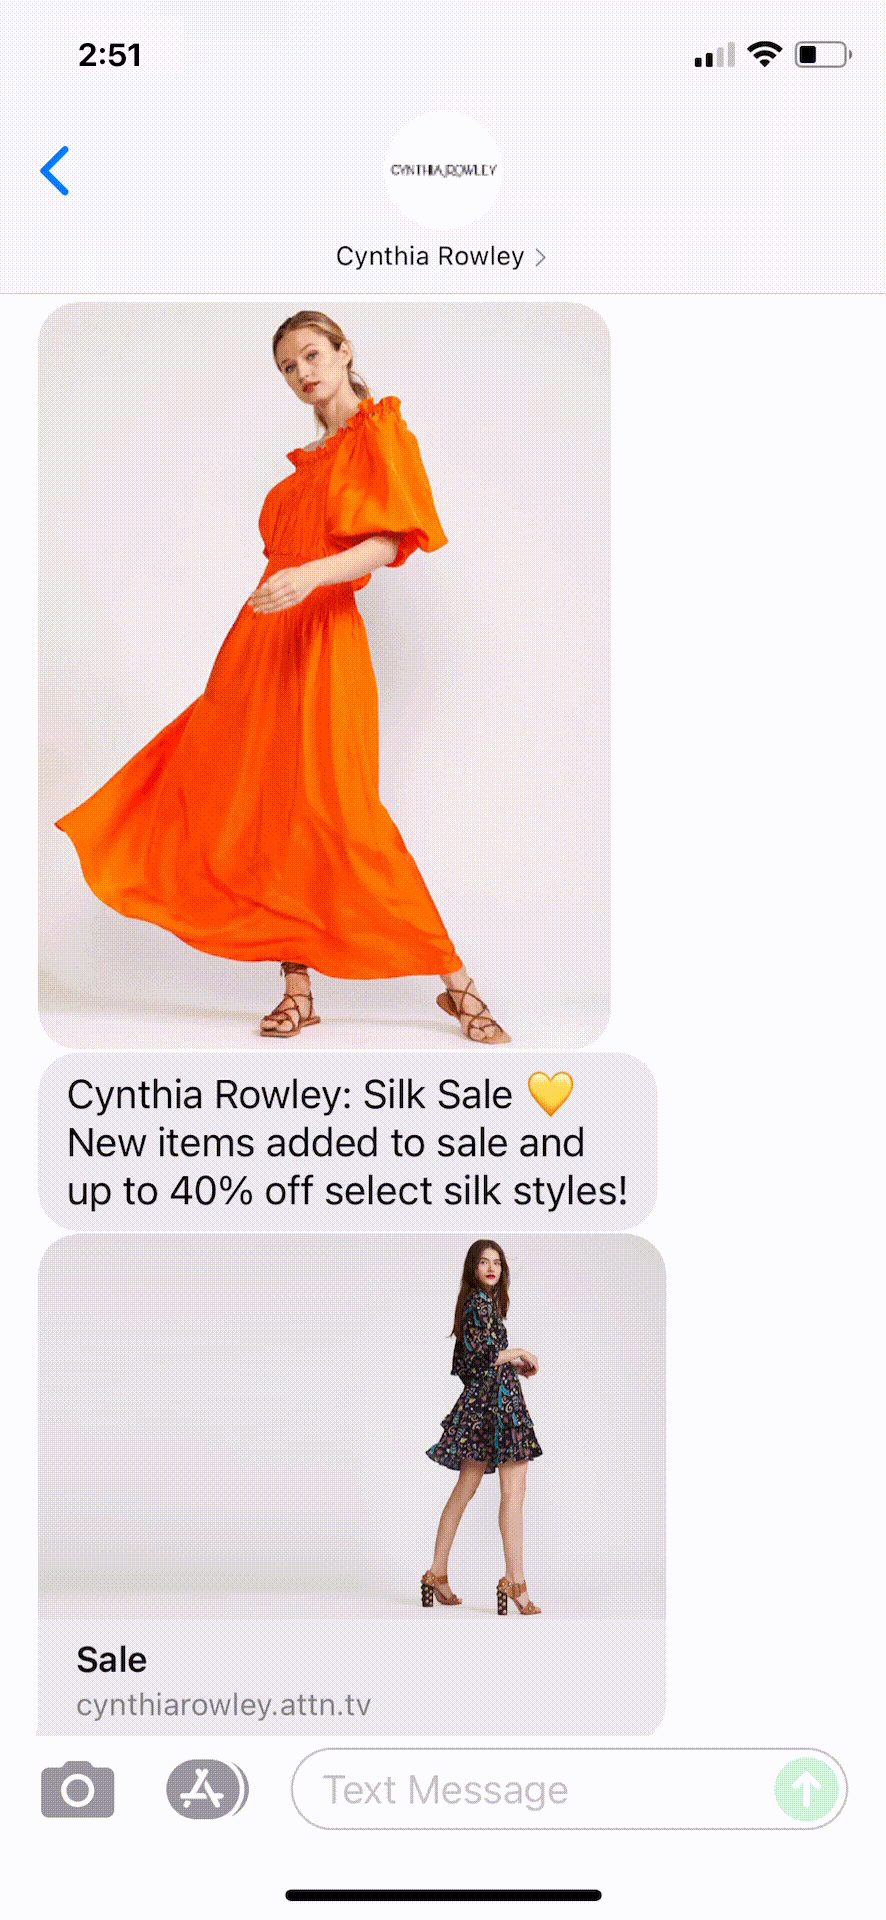 Cynthia-Rowley-Text-Message-Marketing-Example-10.15.2021